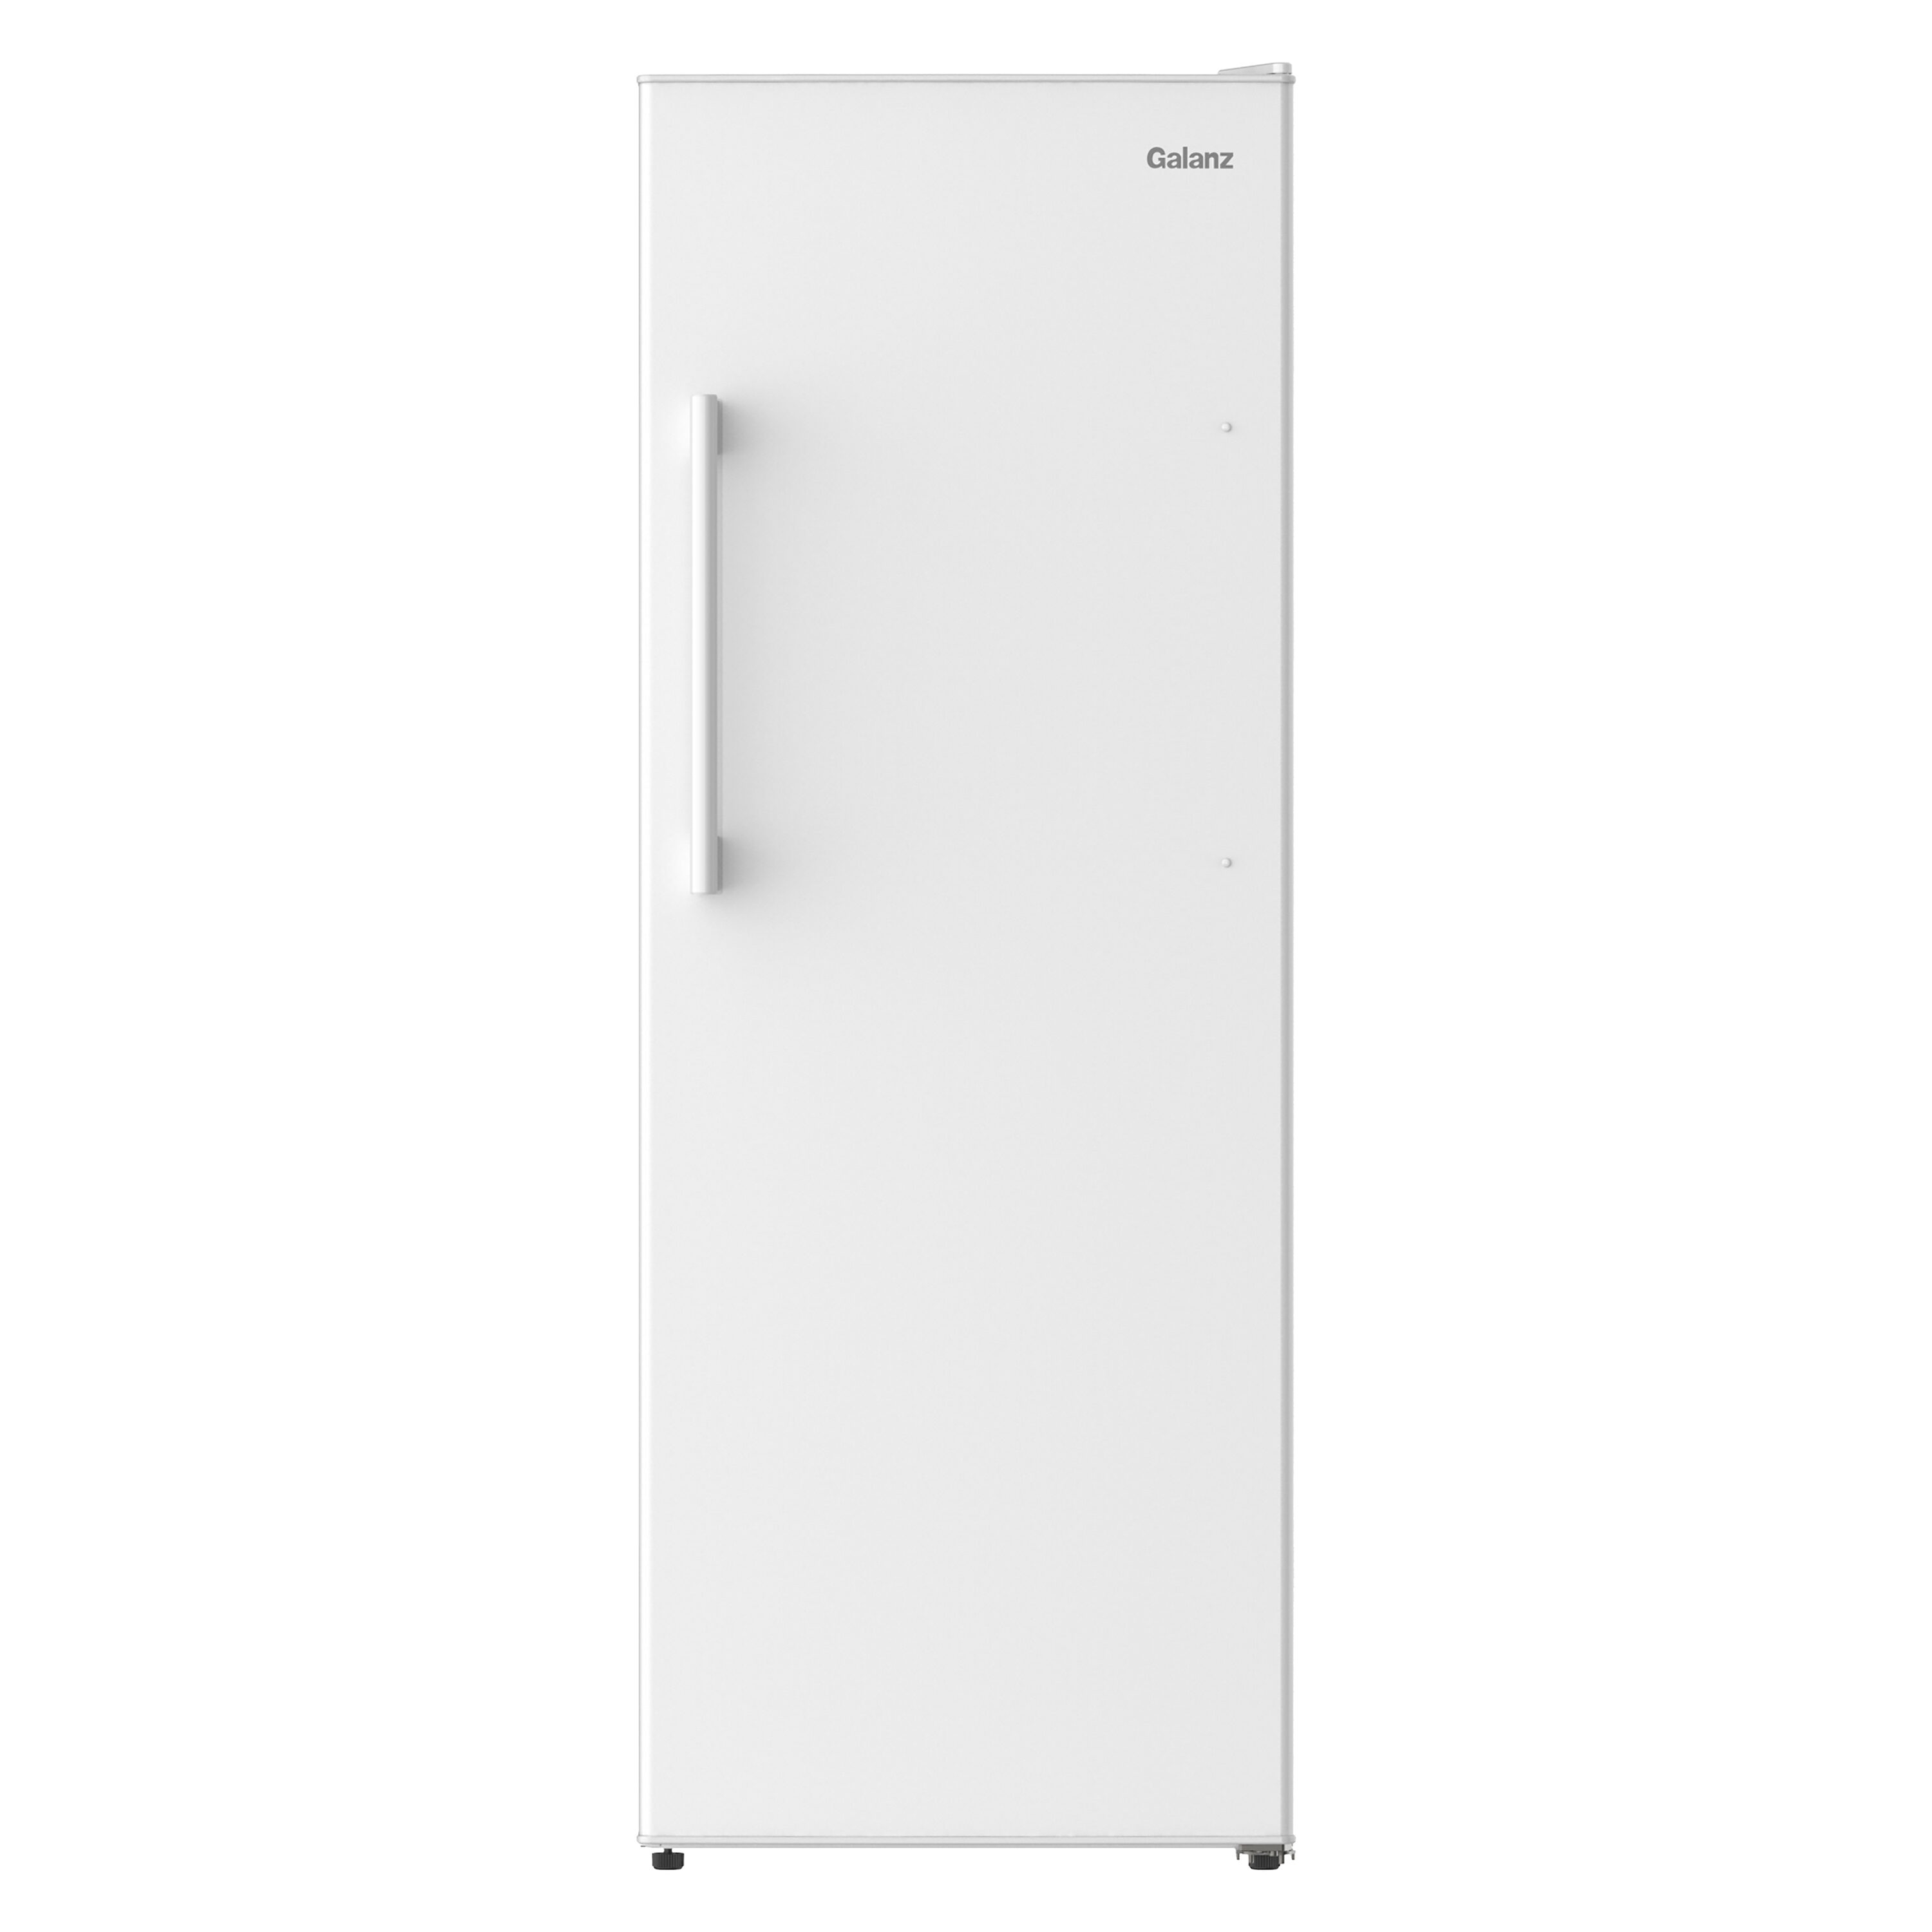 Galanz 11-cu ft Convertible Upright Freezer/Refrigerator (White) ENERGY ...